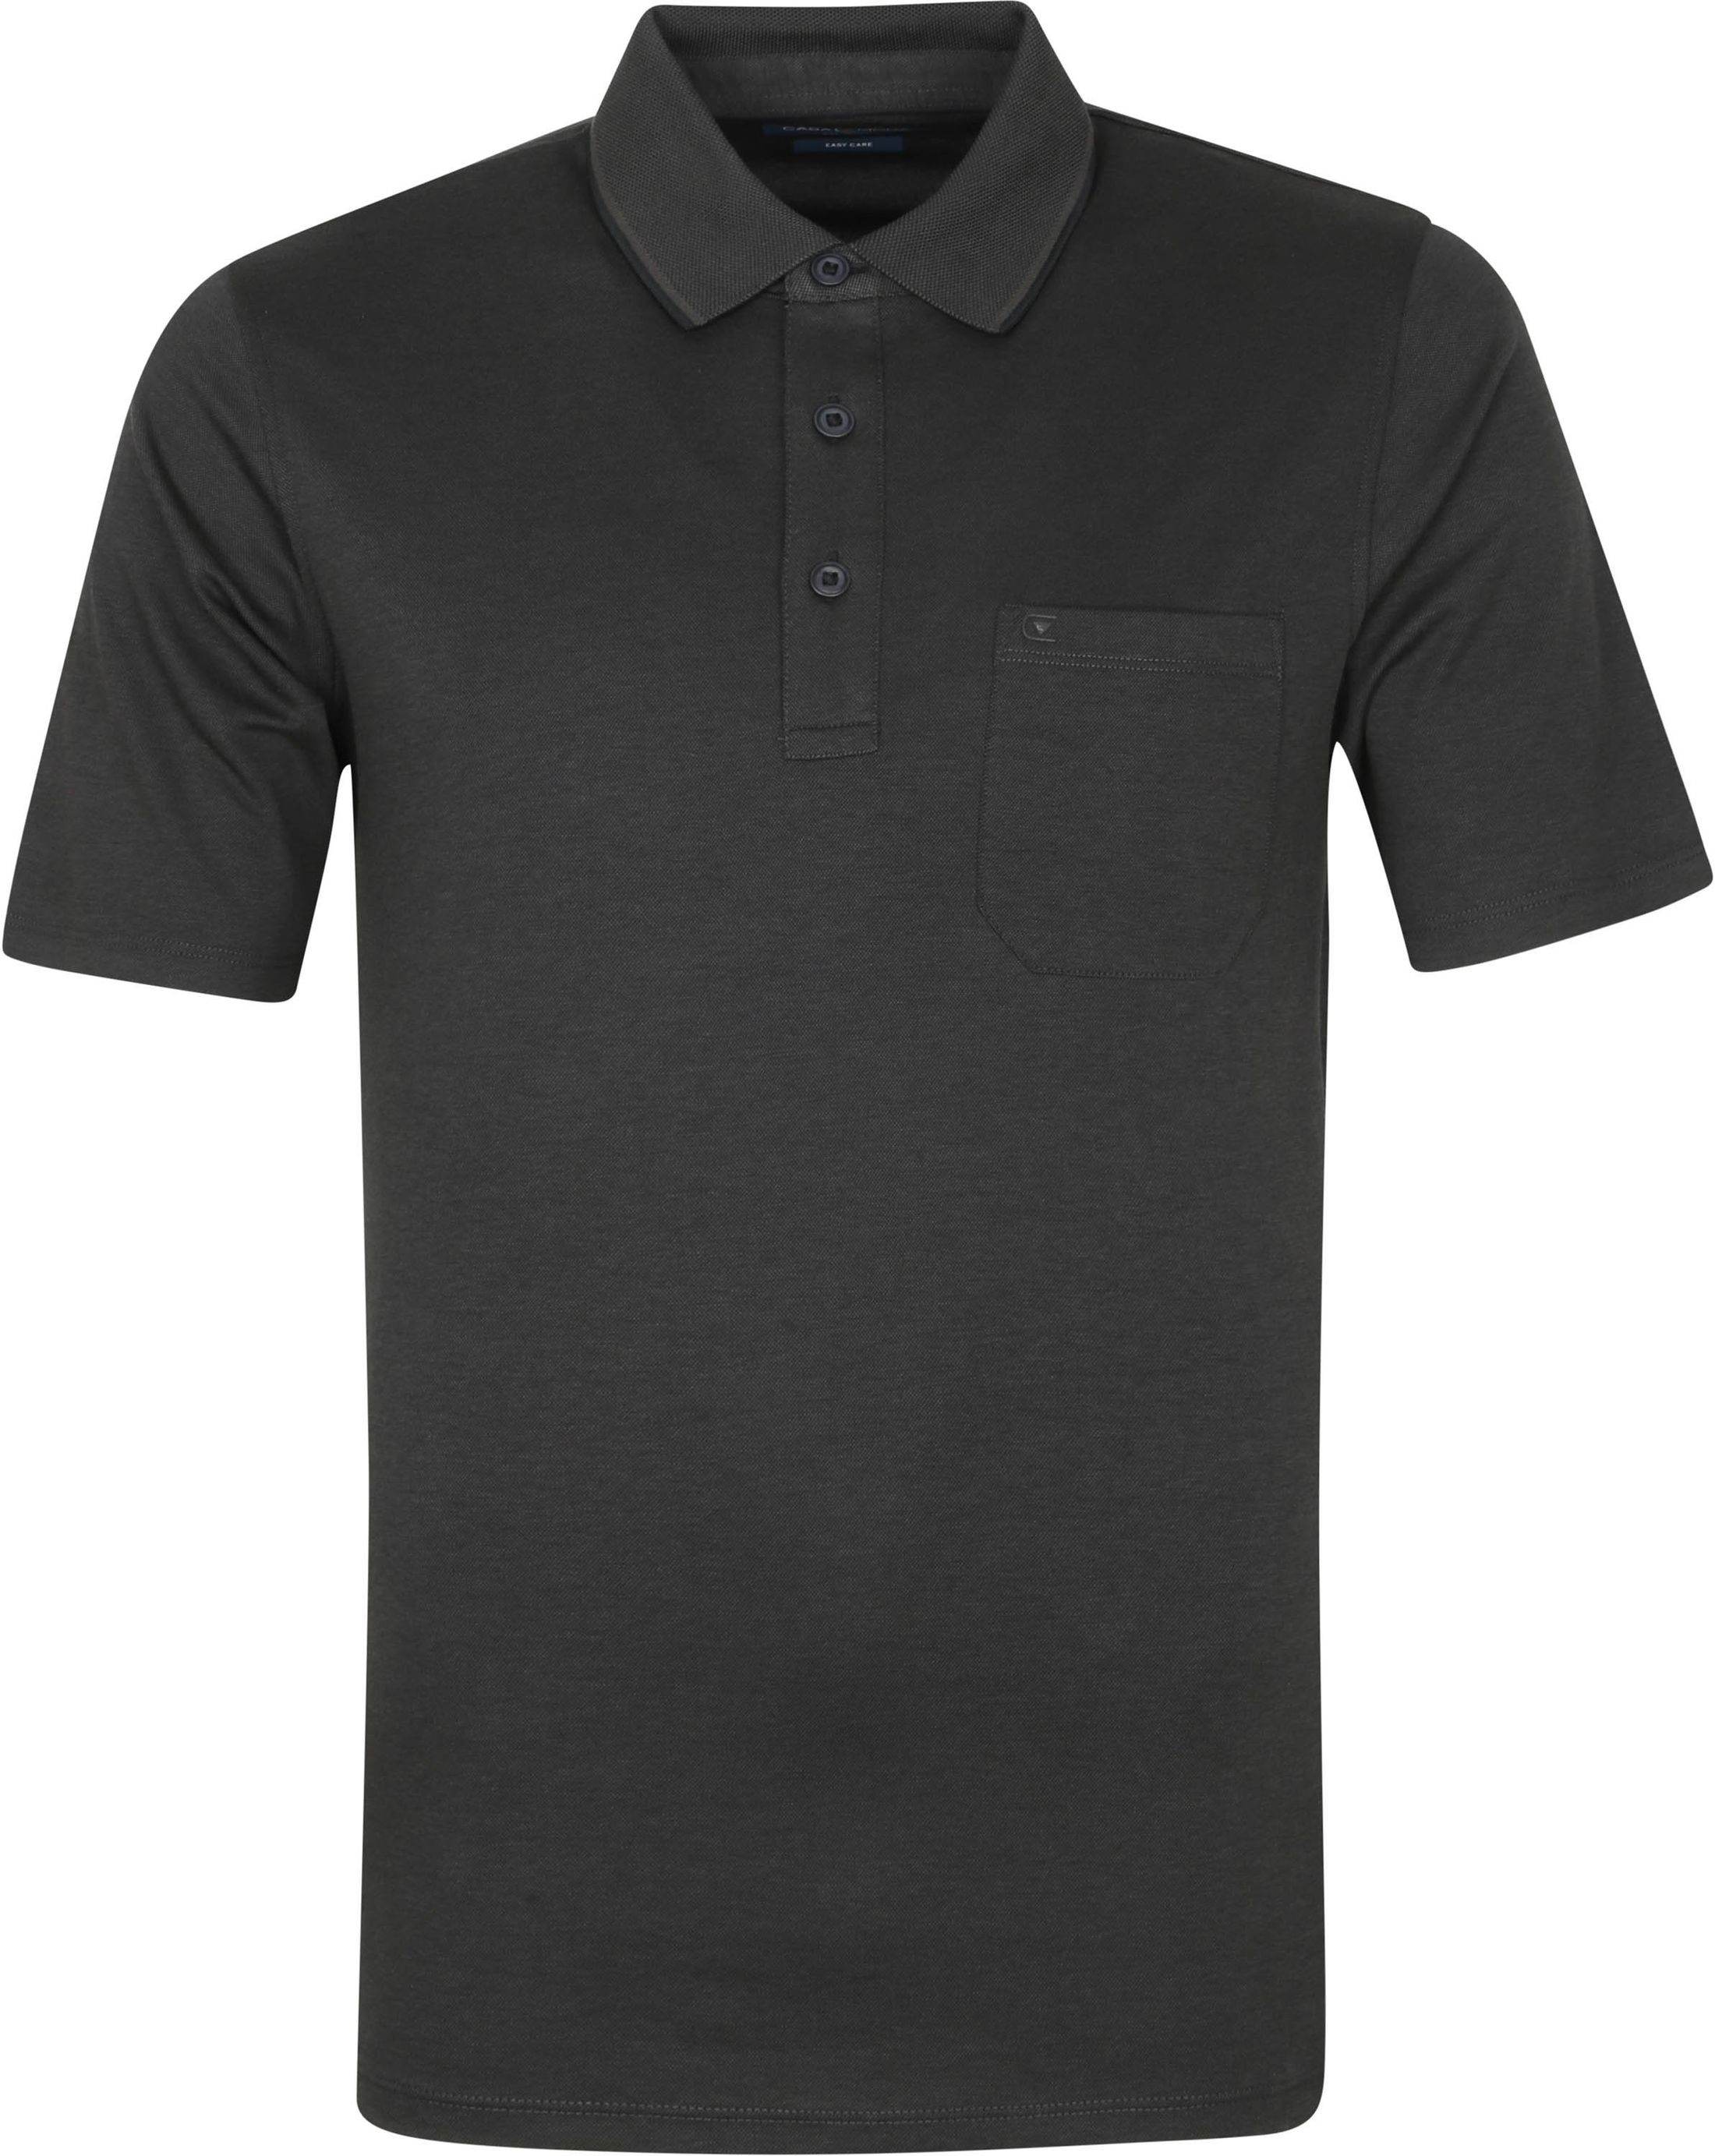 Casa Moda Polo Shirt Anthracite Melange Dark Grey size M